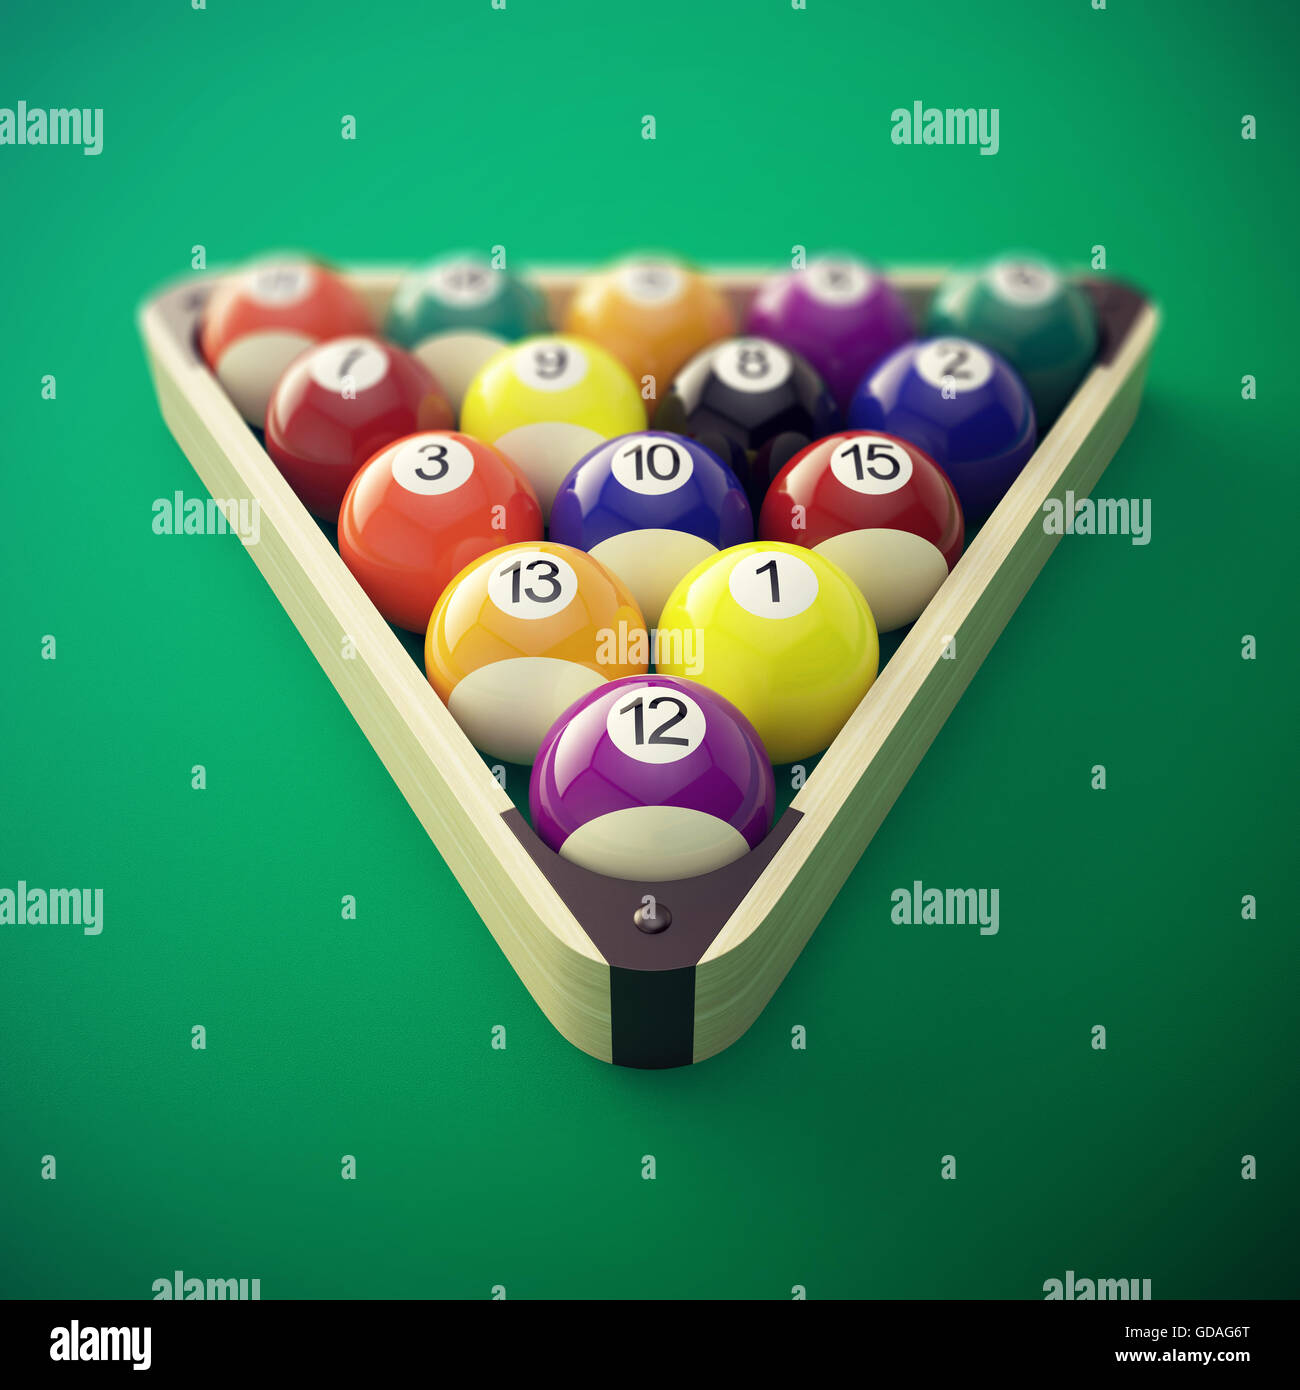 Billiard balls set illustration, 8 Ball Pool Table Billiards Rack